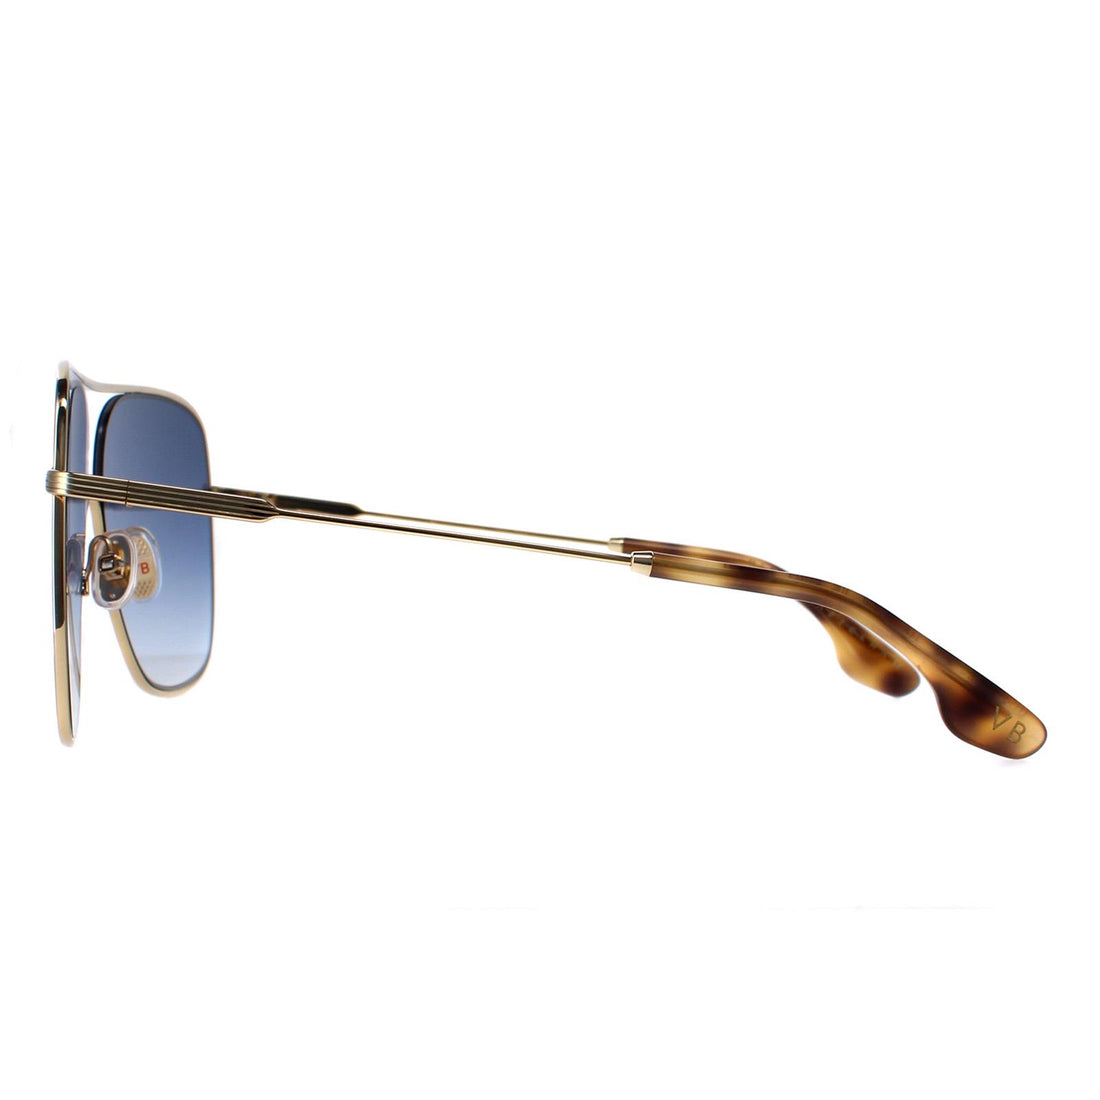 Victoria Beckham Sunglasses VB132S 706 Gold Teal Blue Gradient